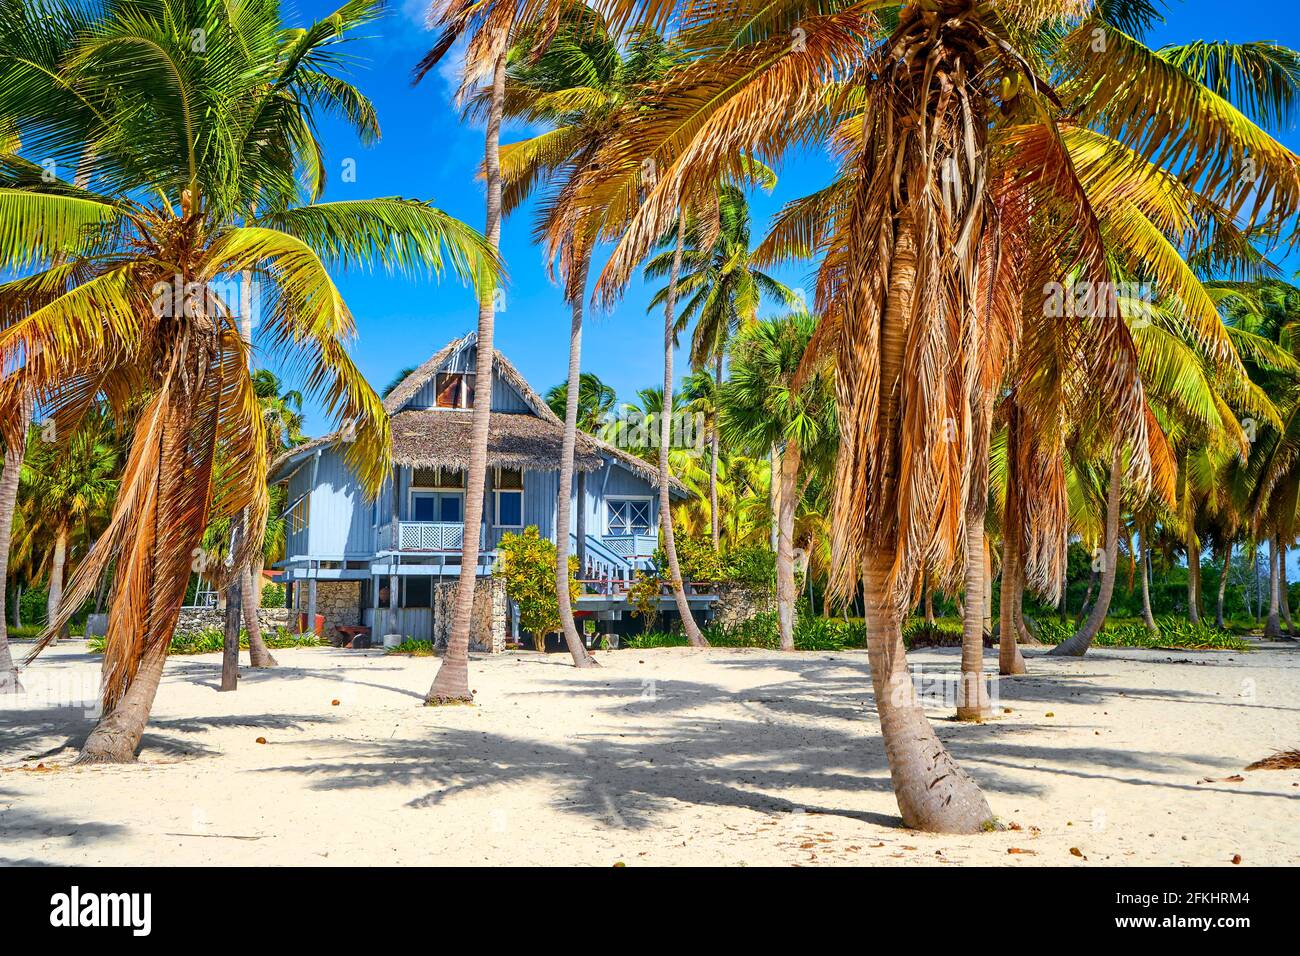 Saona island, Dominican Republic Stock Photo